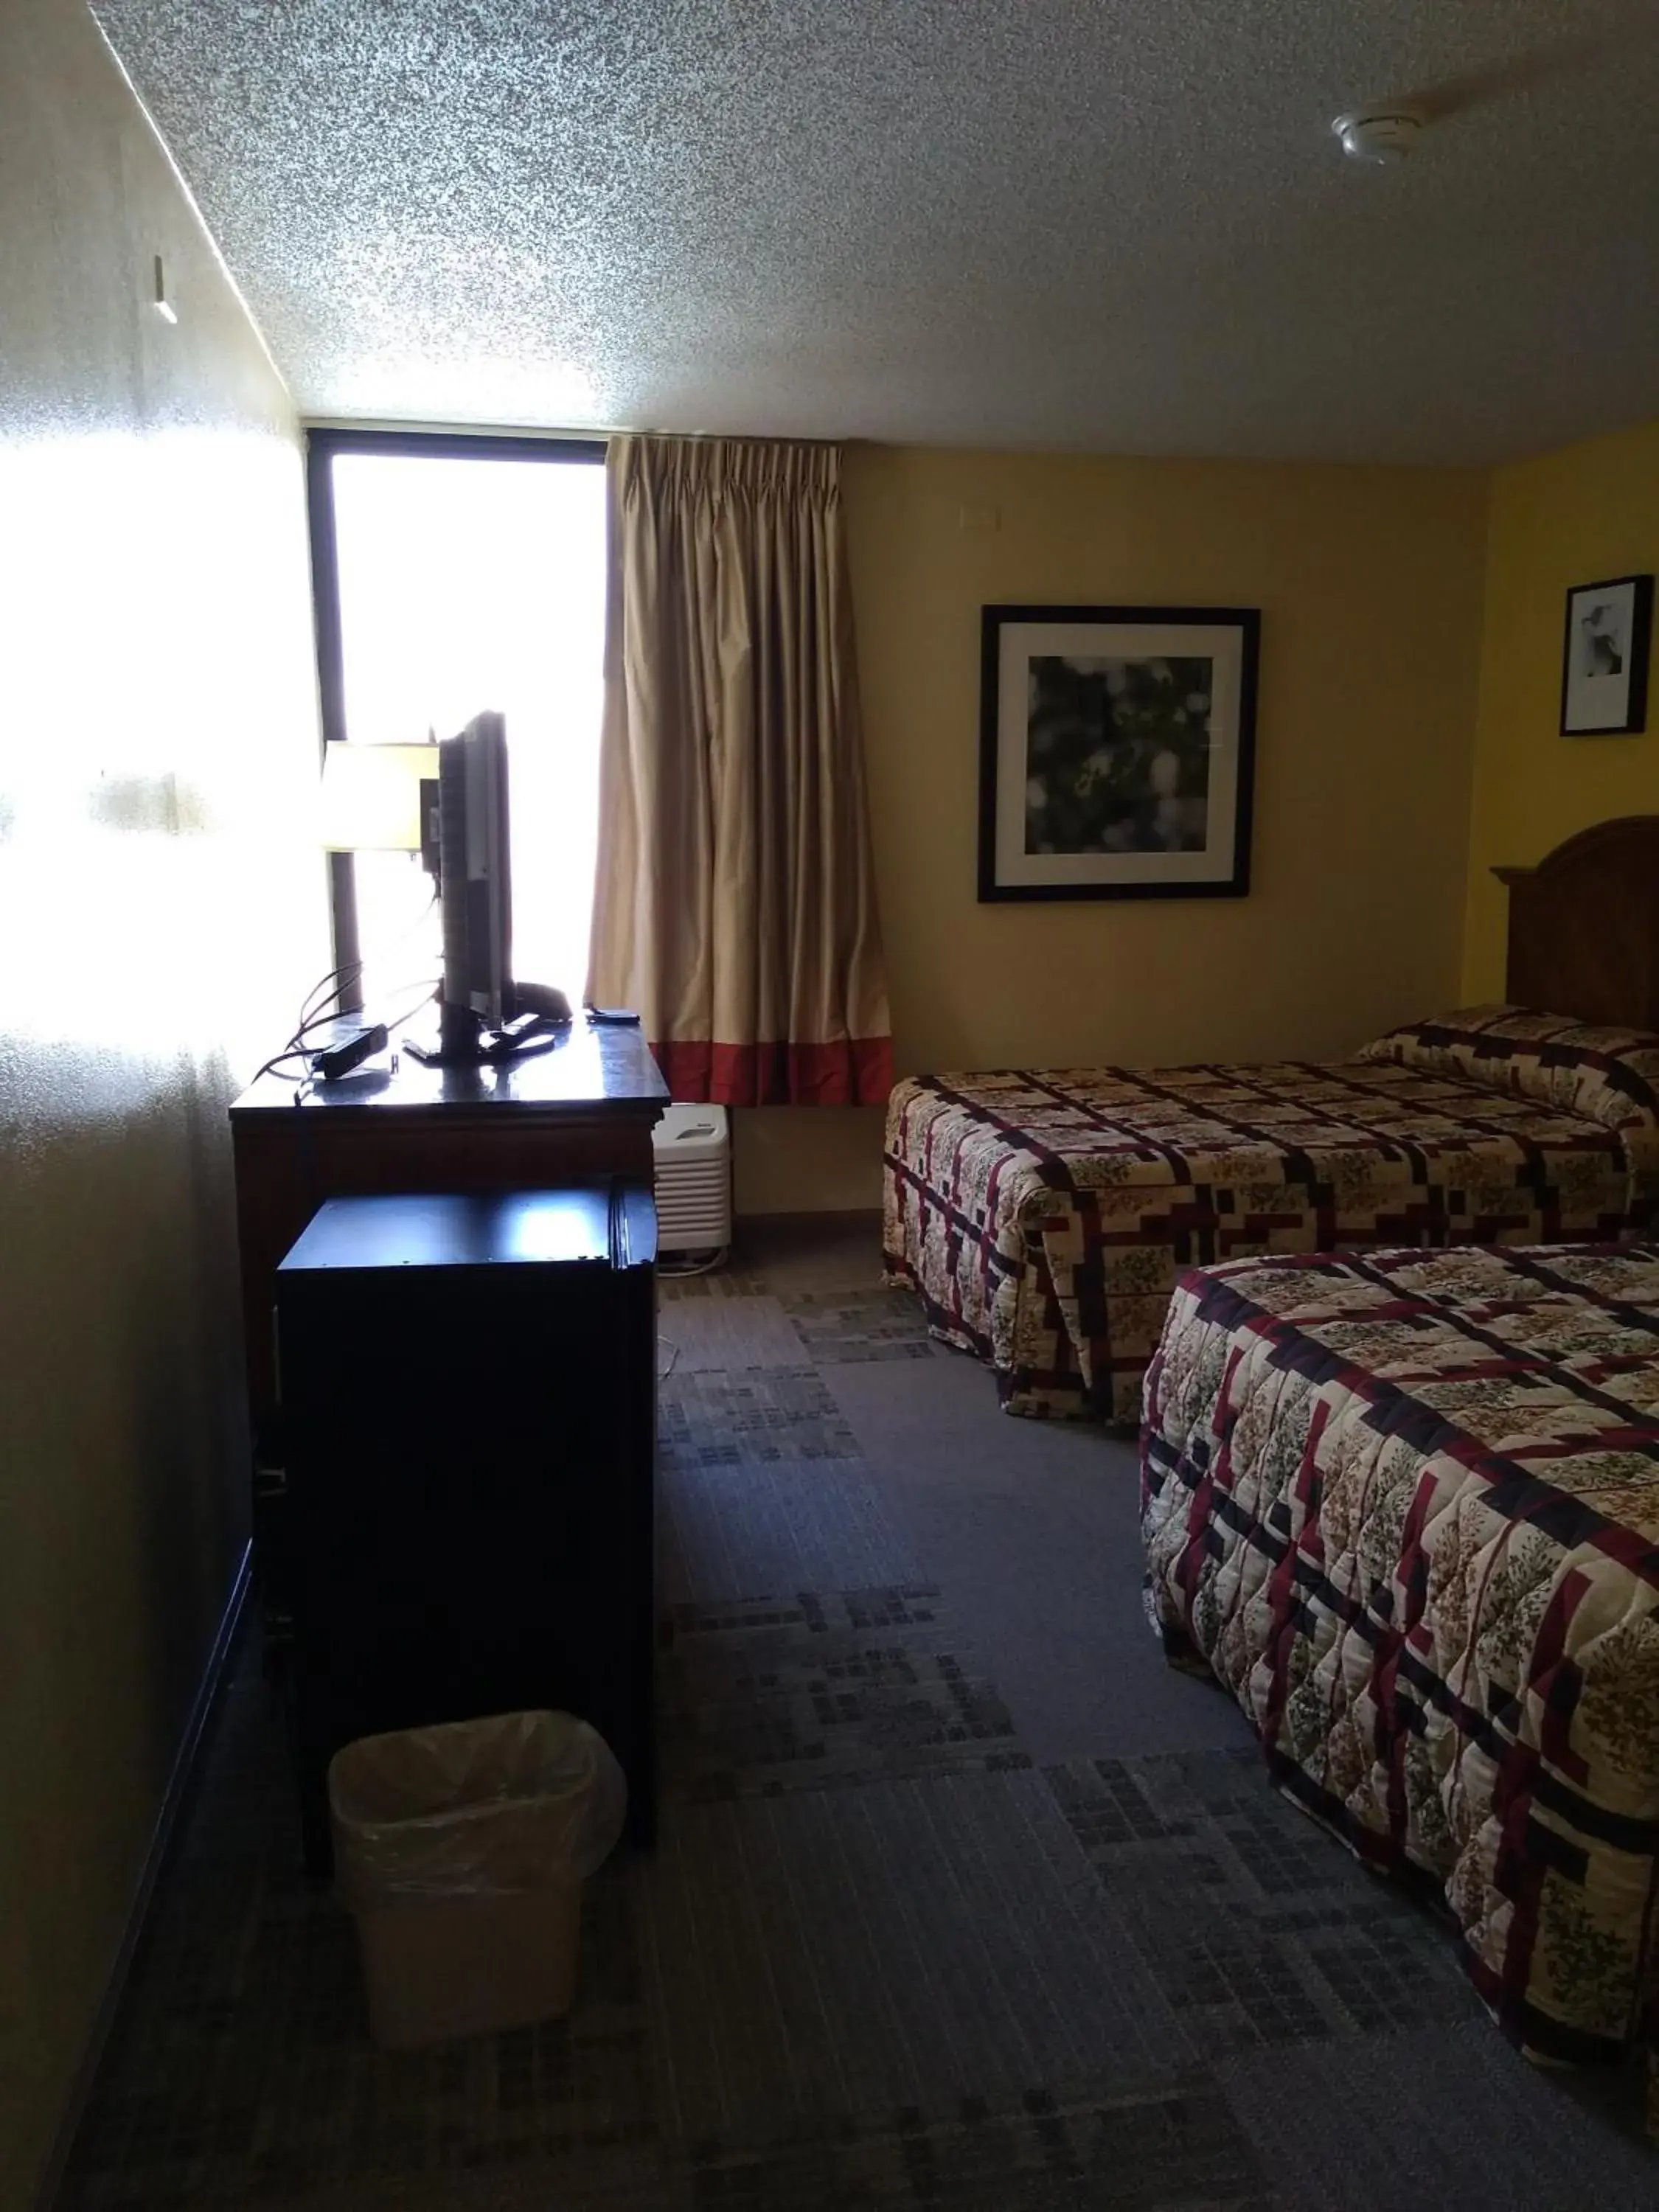 Bedroom in Red Carpet Inn-Macon